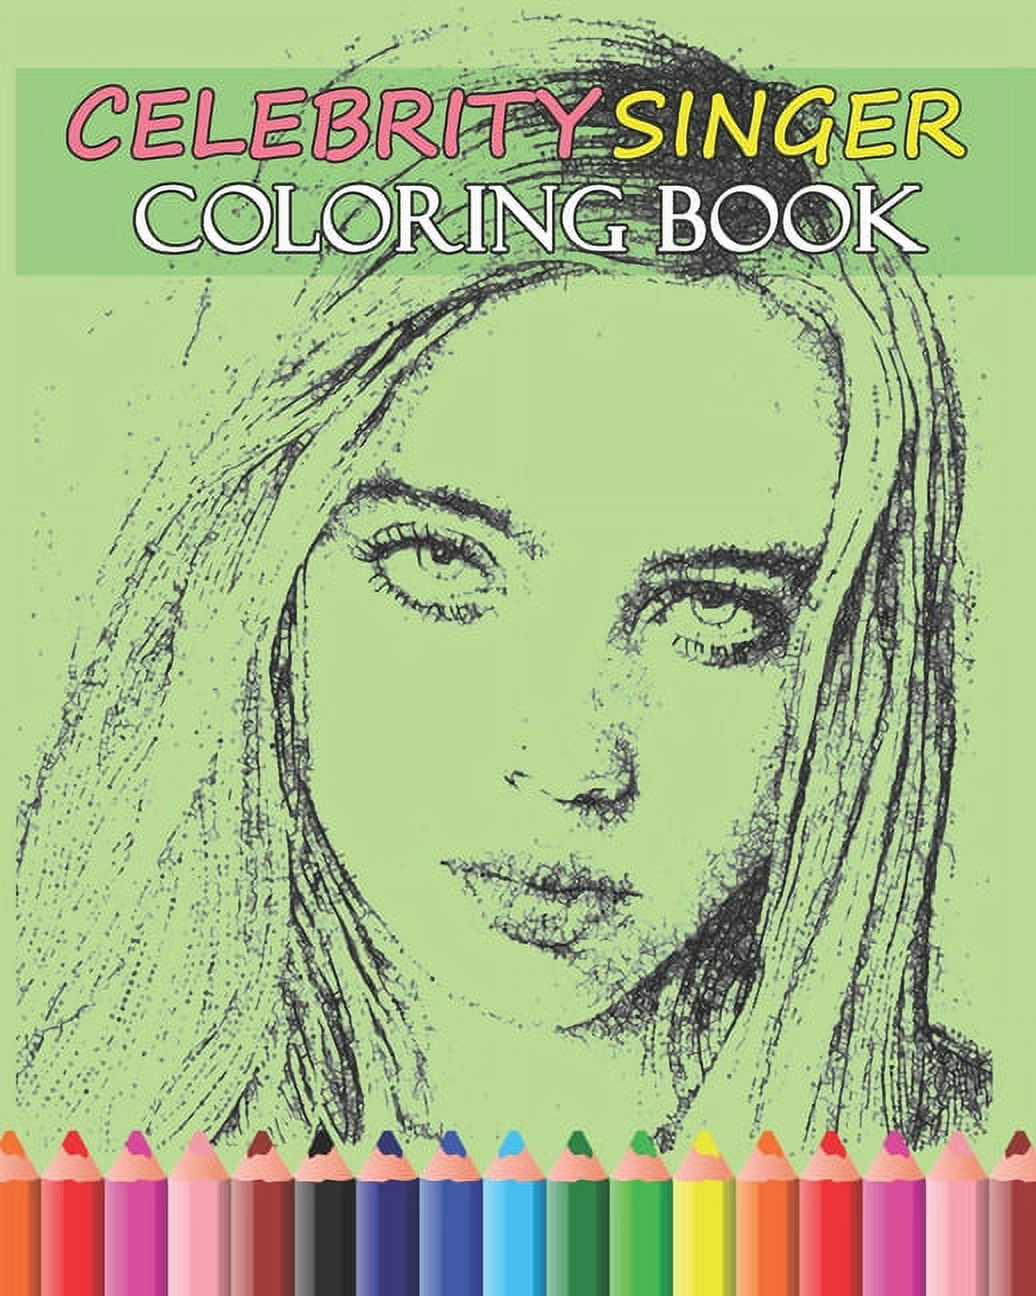 Pop Star Colouring Books